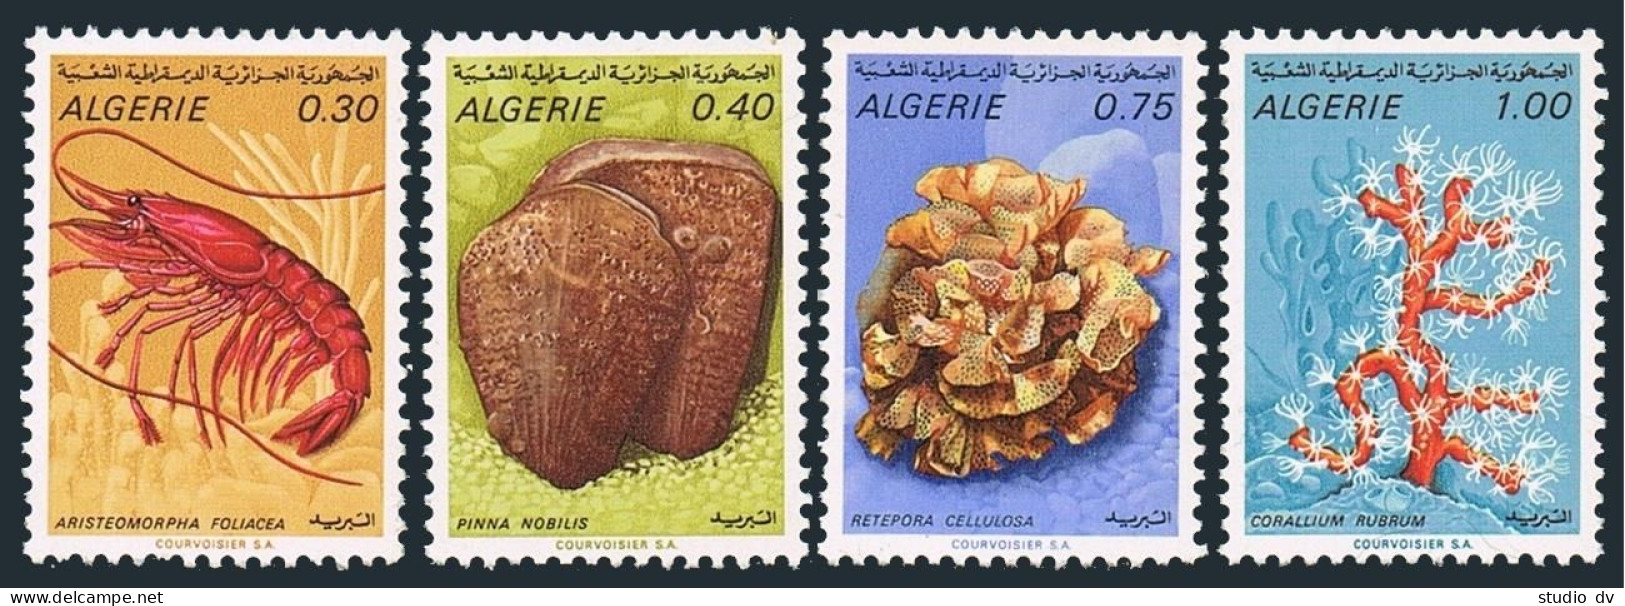 Algeria 435-438,MNH.Michel 544-547. 1970.Spiny Lobster,Mollusk,Retepora,Coral. - Algeria (1962-...)